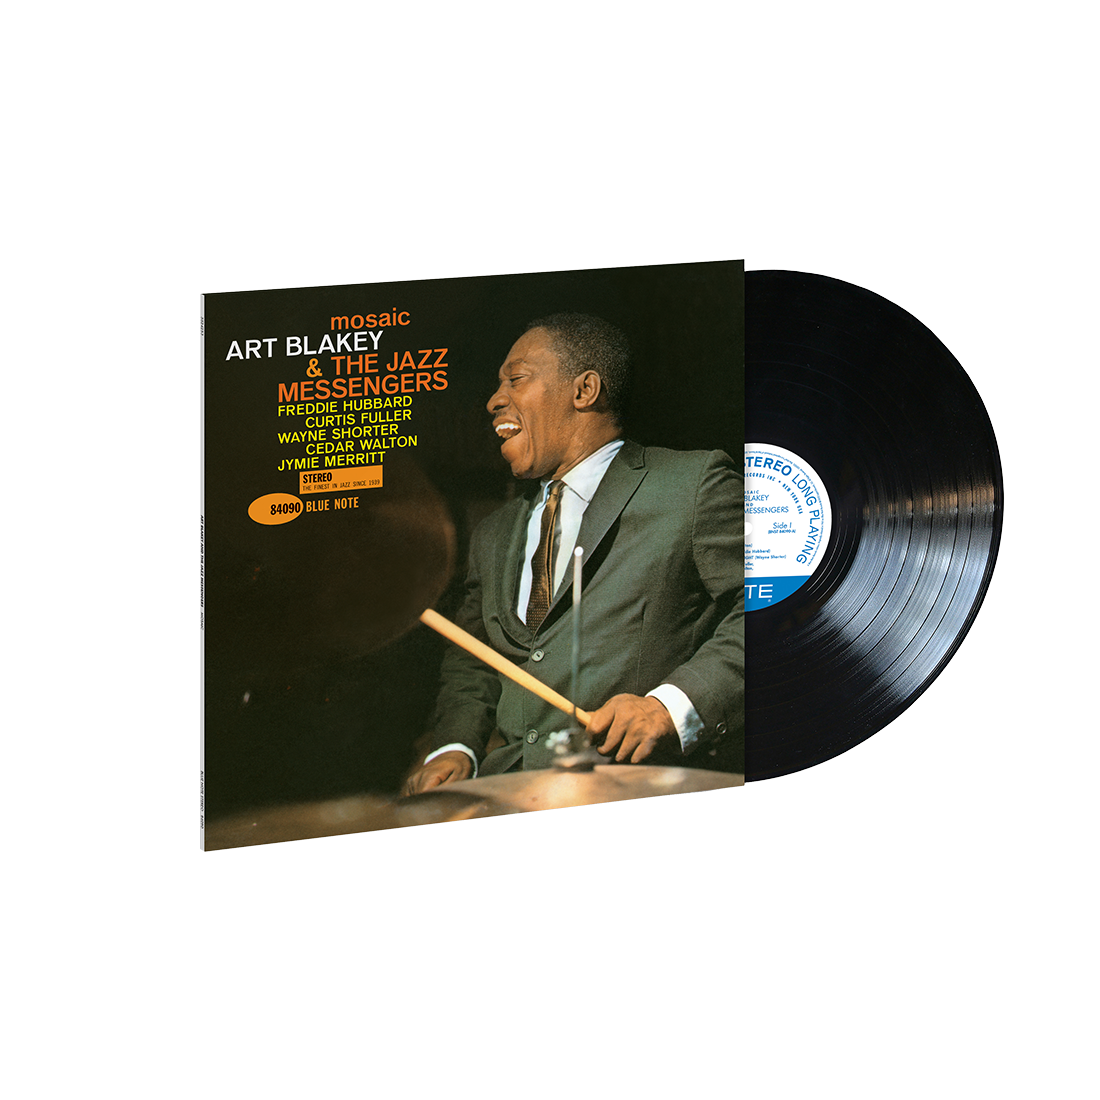 Art Blakey & The Jazz Messengers - Mosaic (Classic Vinyl series): Vinyl LP